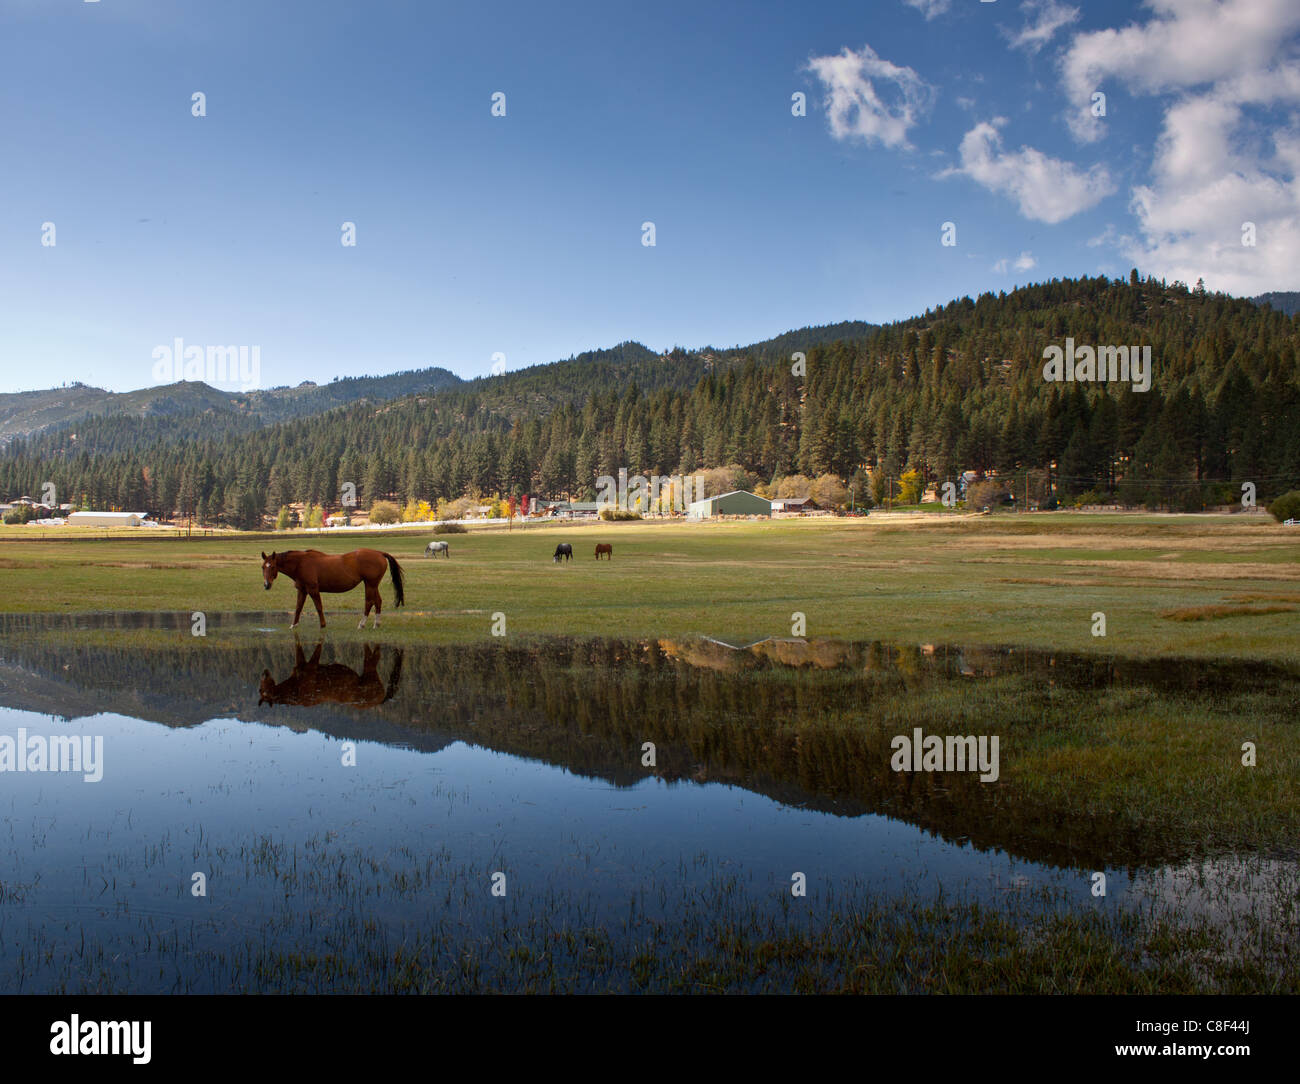 Image of farmland and a horse. Stock Photo